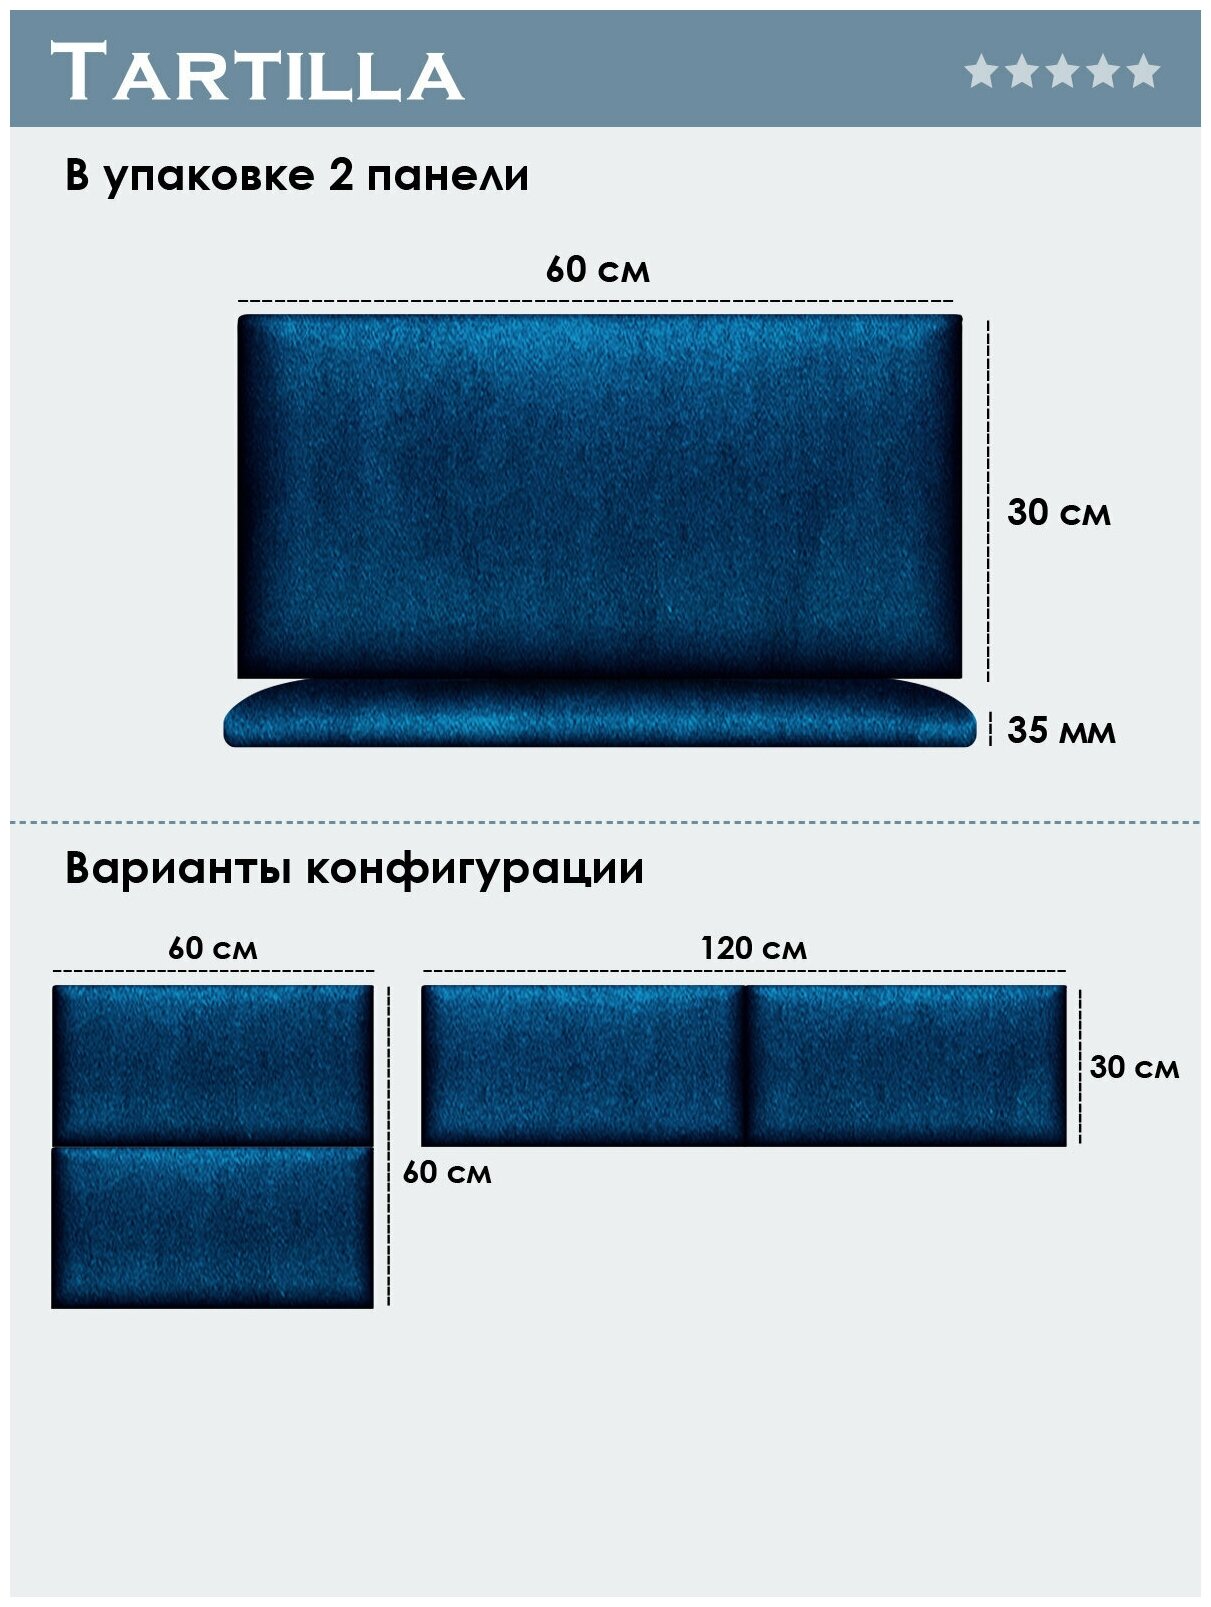 Мягкое изголовье кровати Shtorm Sky blue 30х60 см 2 шт.